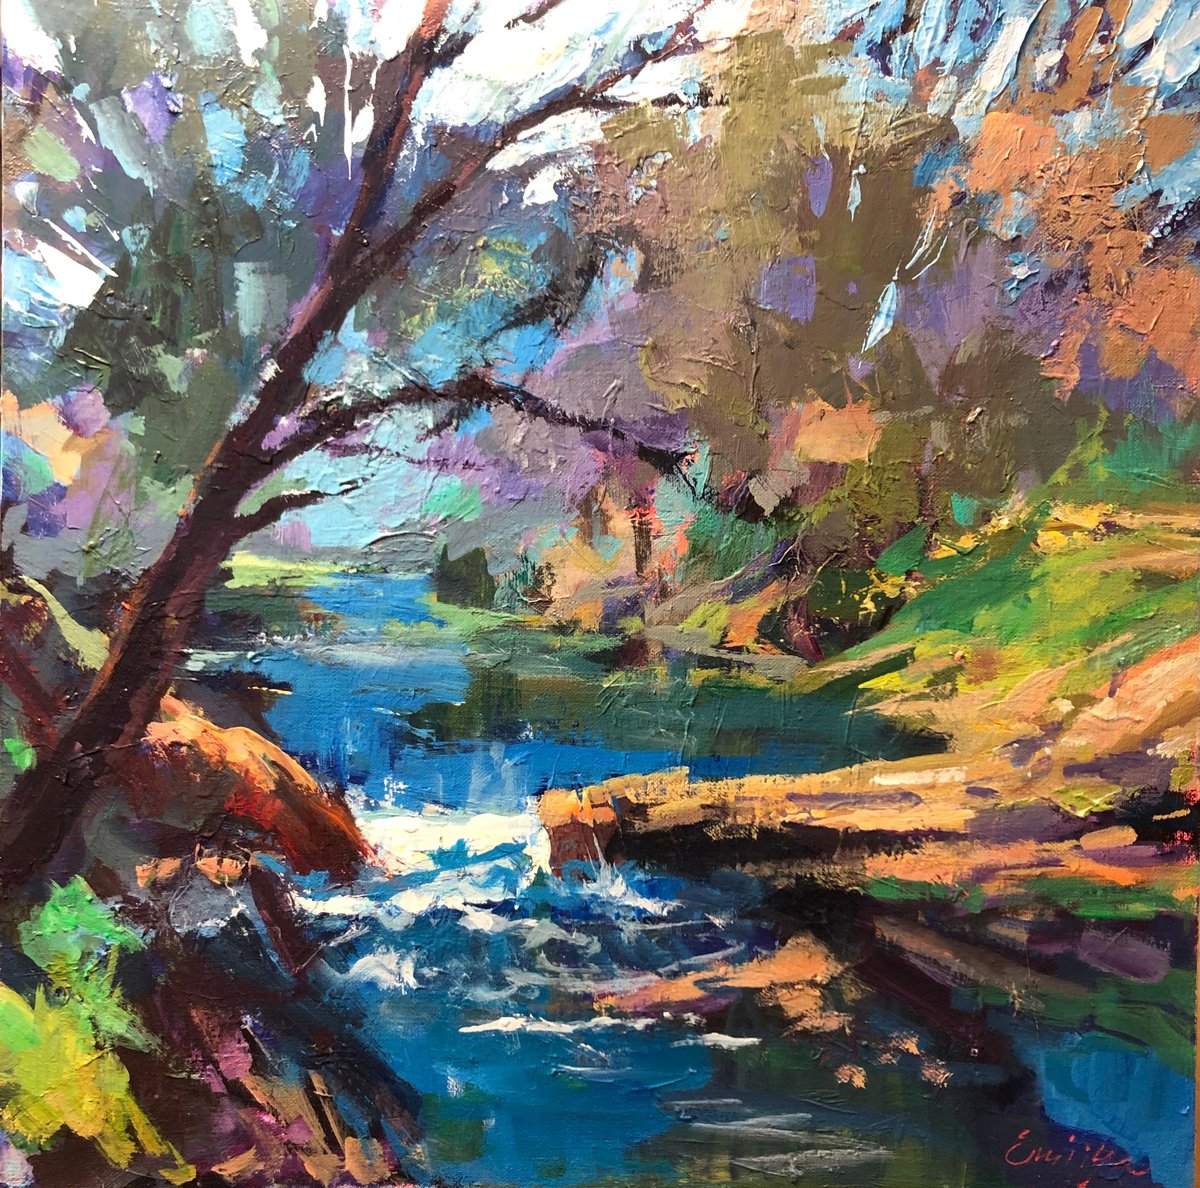 Murmur of the Creek by Emiliya Lane